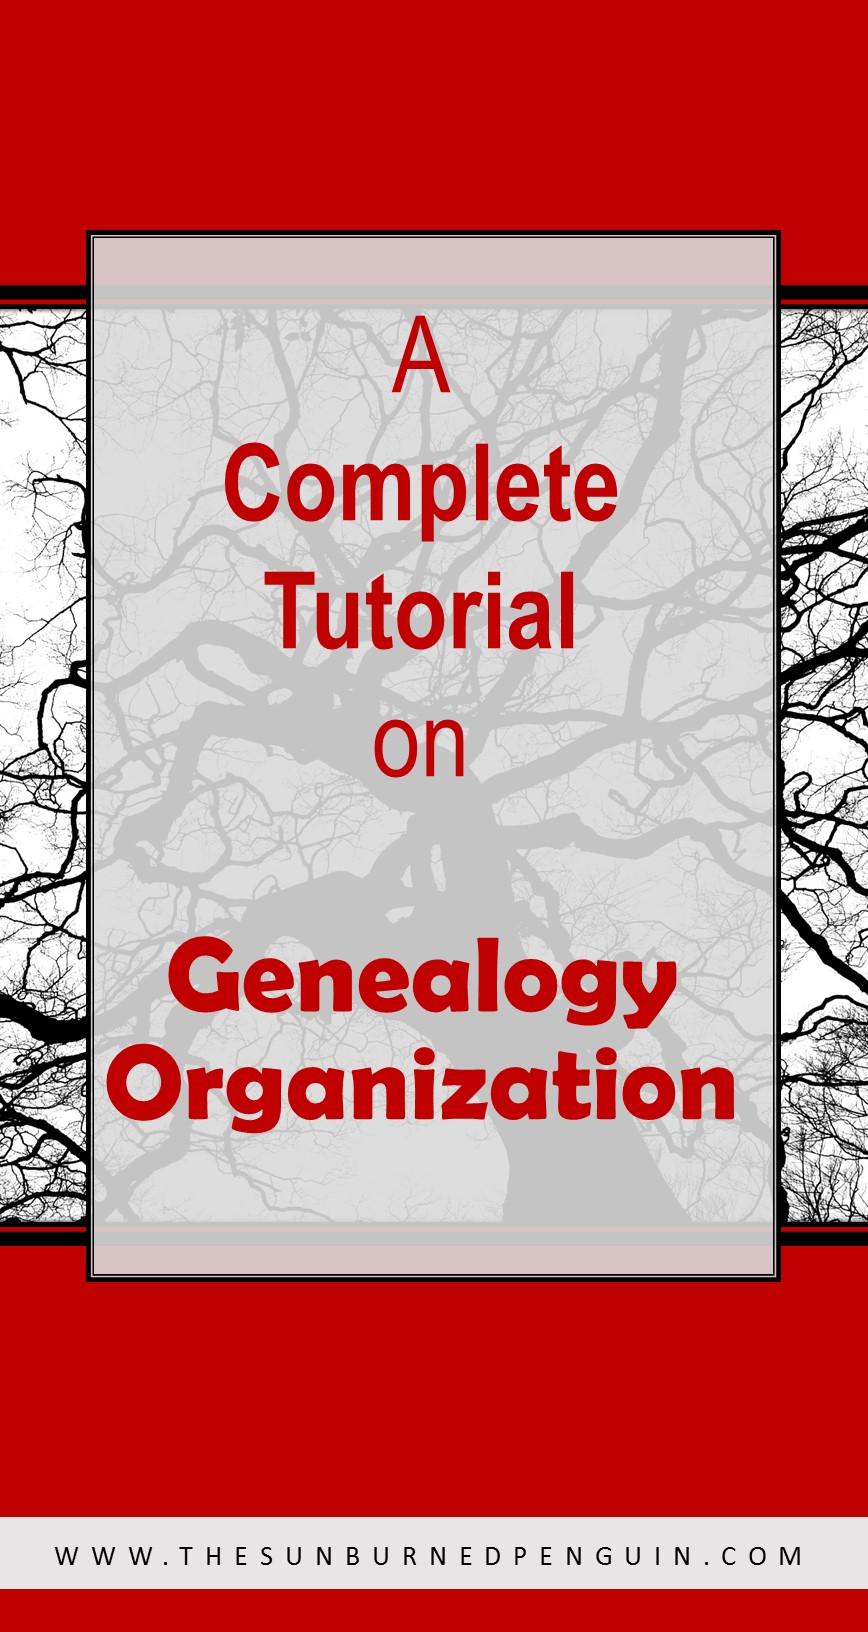 A Complete Tutorial on Genealogy Organization